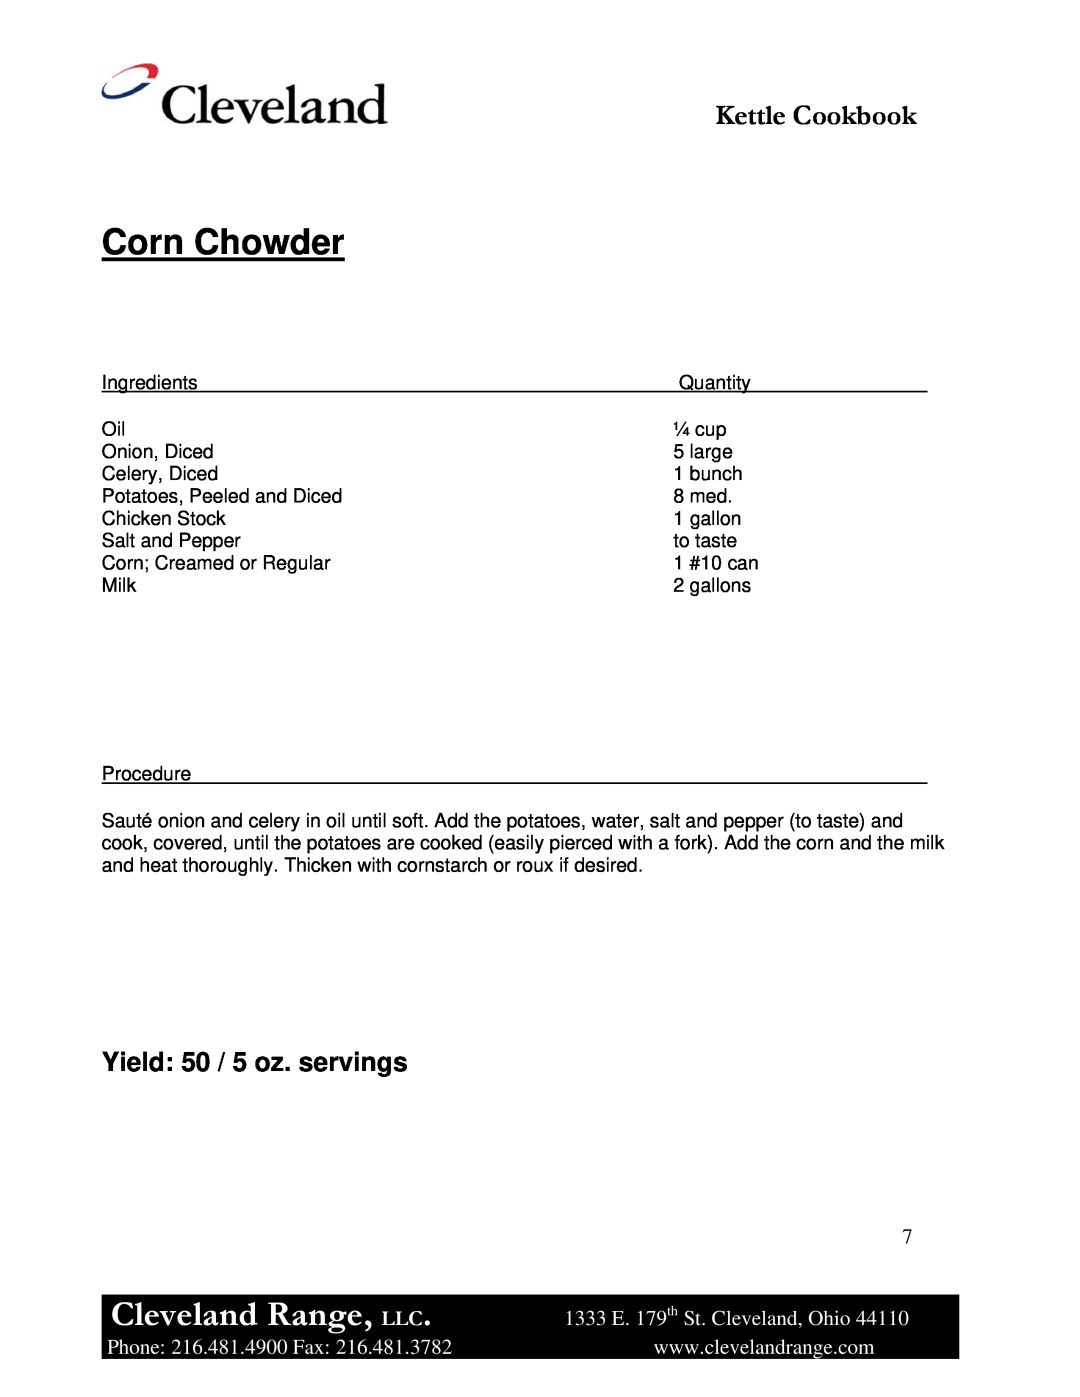 Cleveland Range Steam Jacketed Kettle manual Corn Chowder, Cleveland Range, LLC, Kettle Cookbook, Yield 50 / 5 oz. servings 